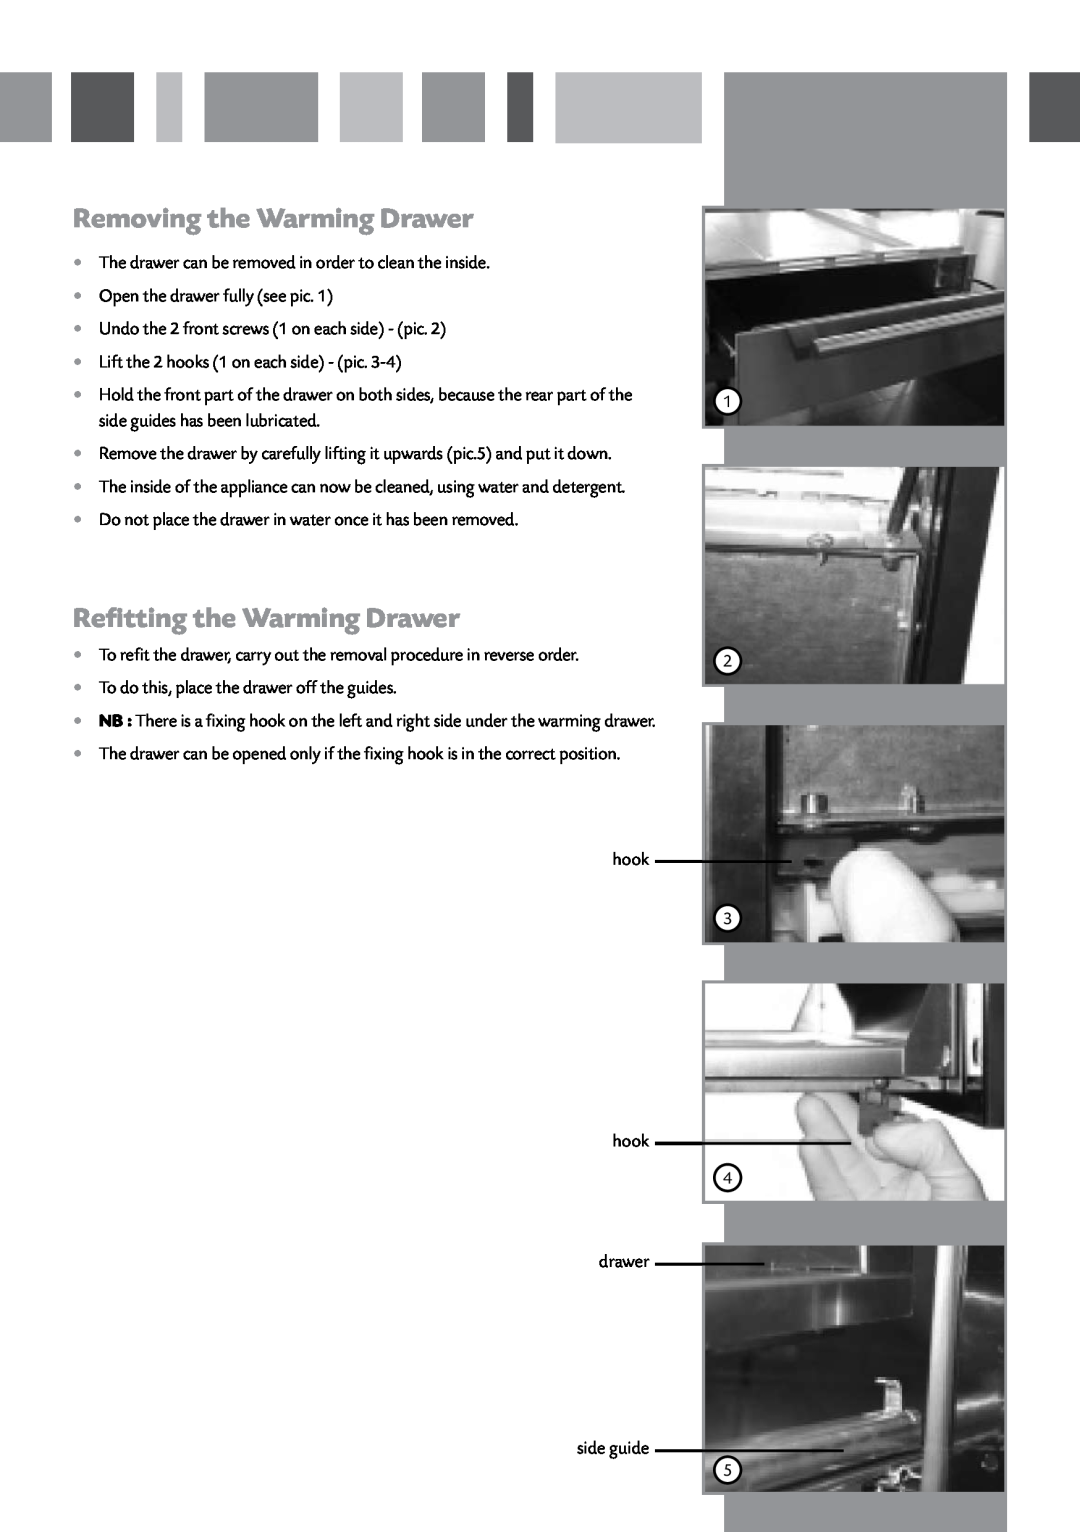 CDA SVW140 manual Removing the Warming Drawer, Refitting the Warming Drawer 